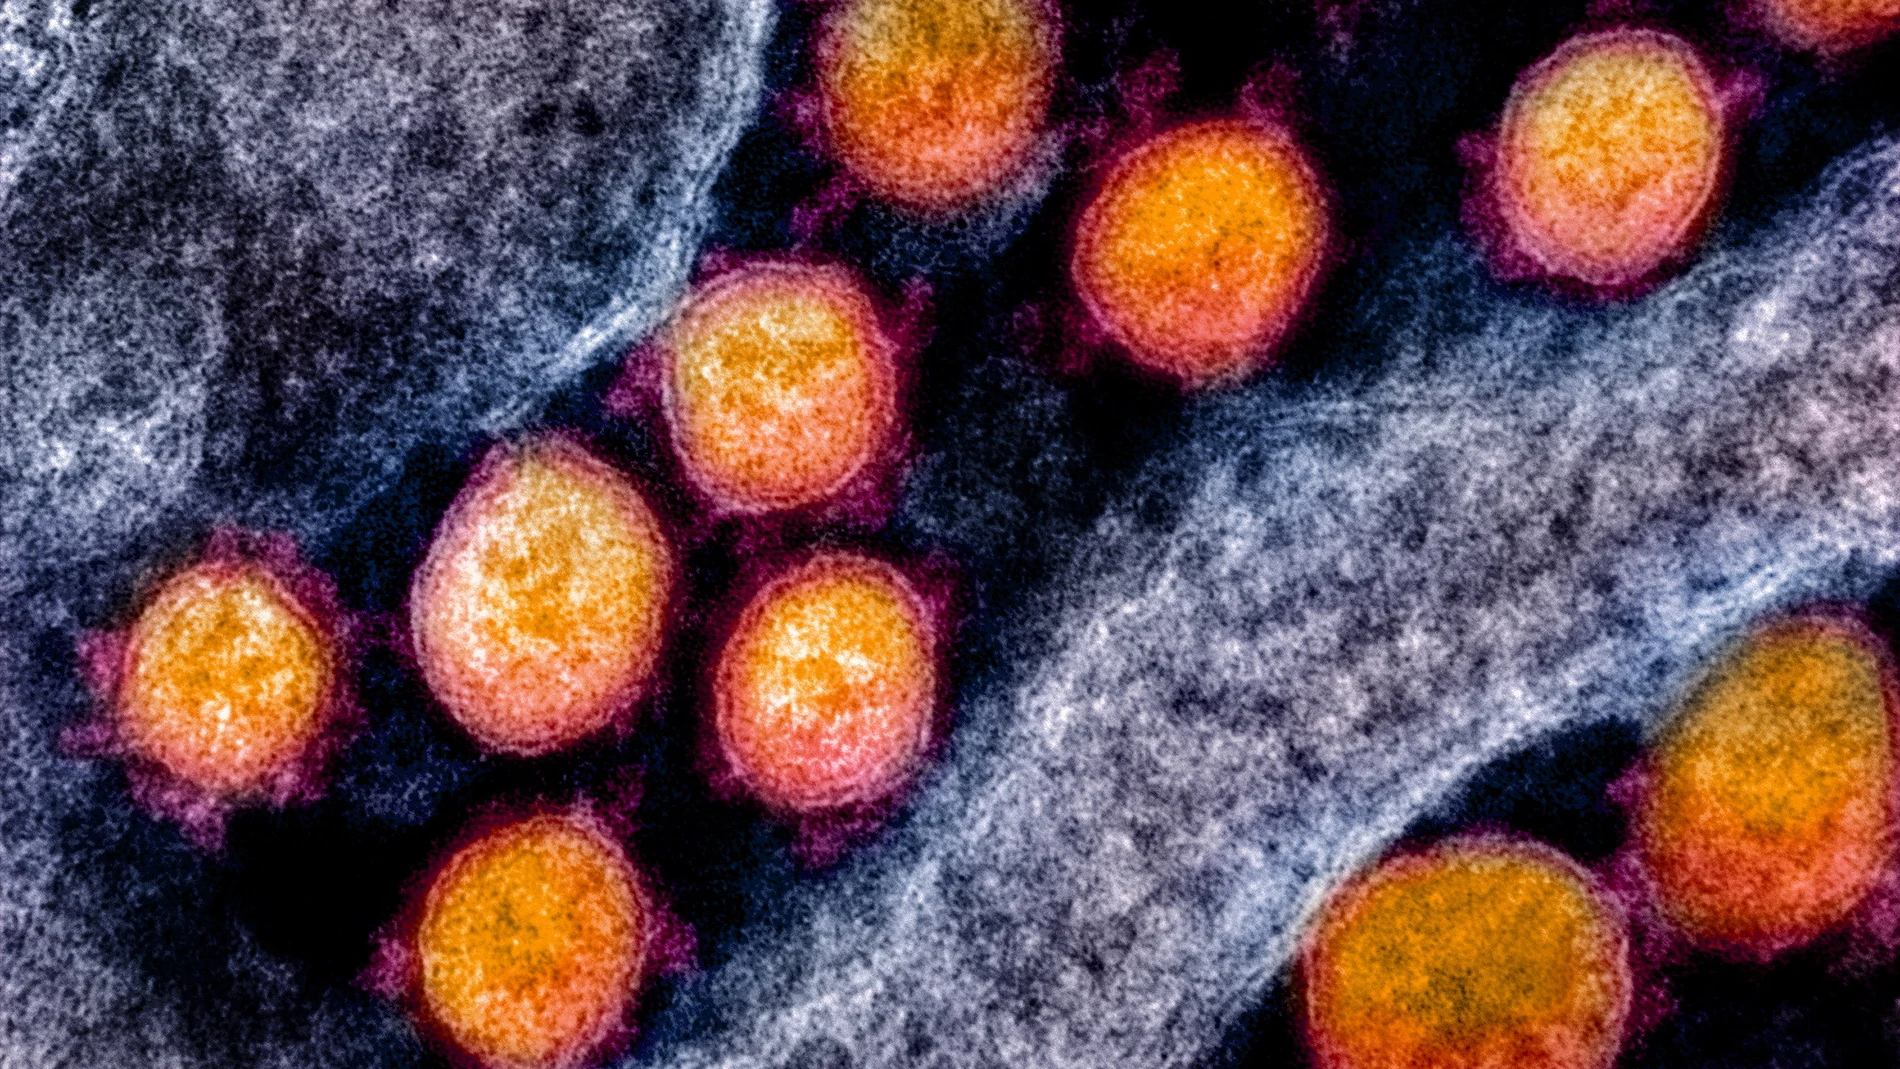 Research on novel coronavirus 2019, National Institutes of Health